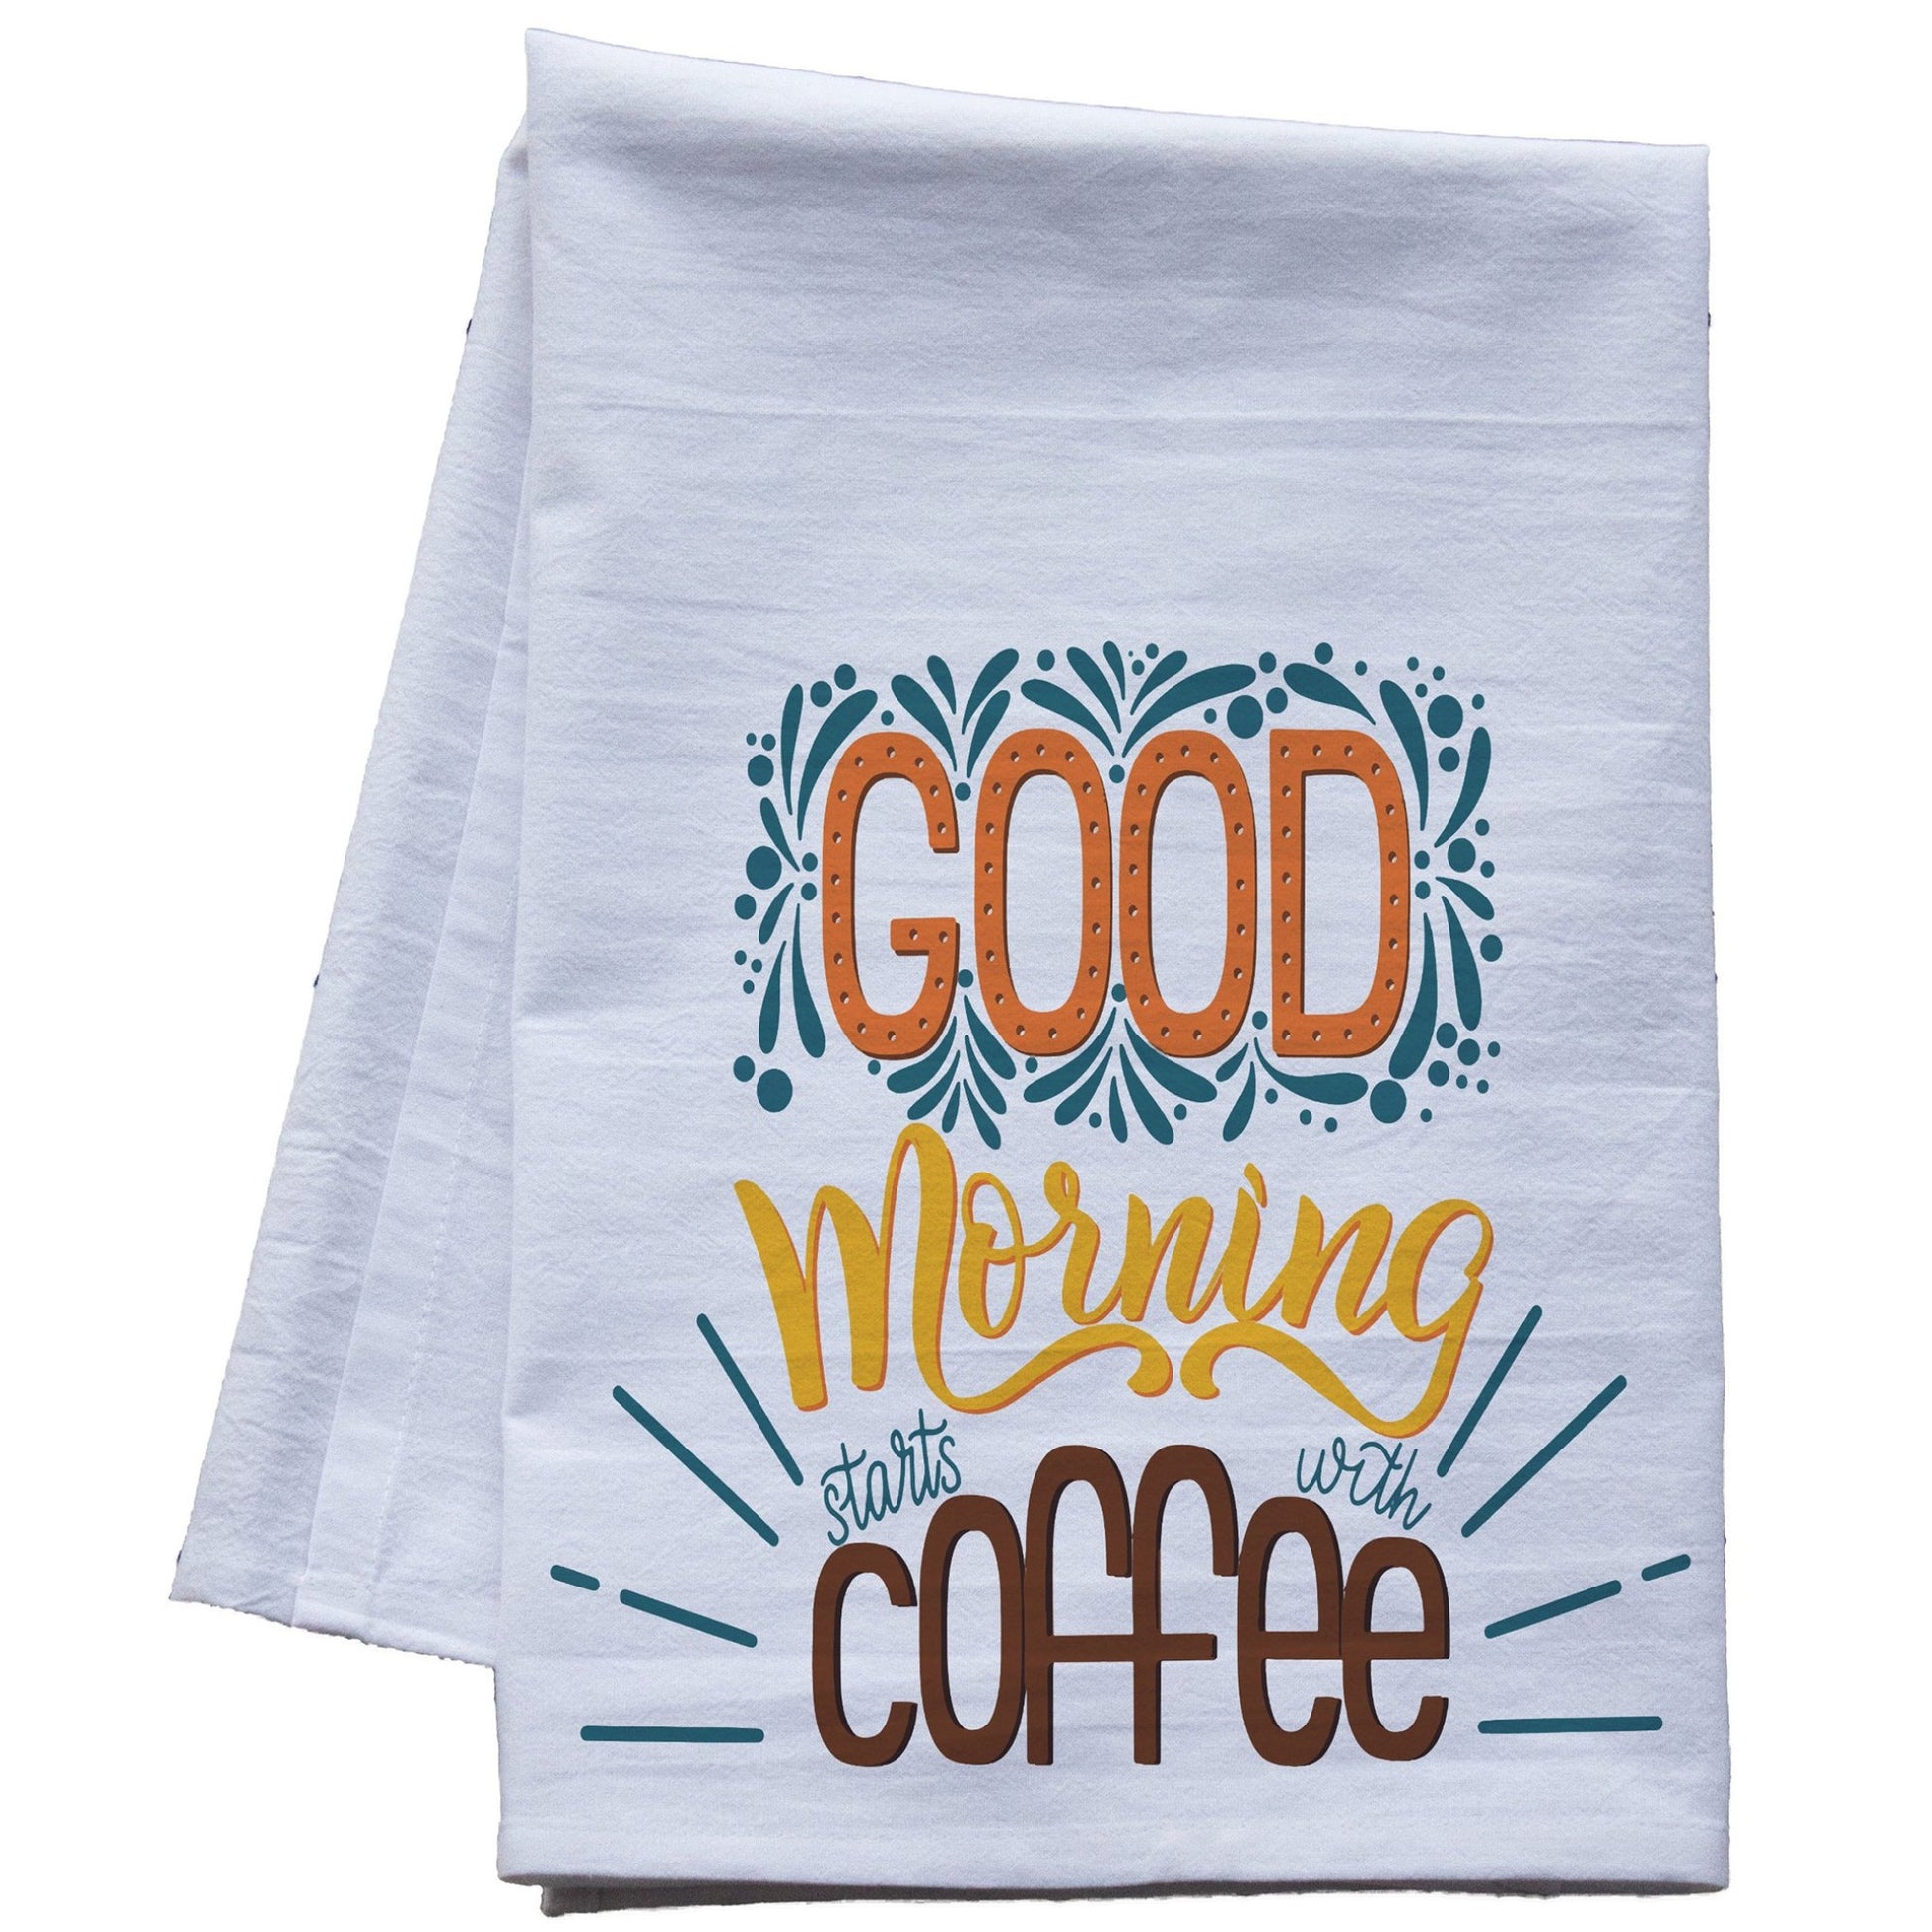 Good morning starts with coffee! premium tea towel, kitchen towel